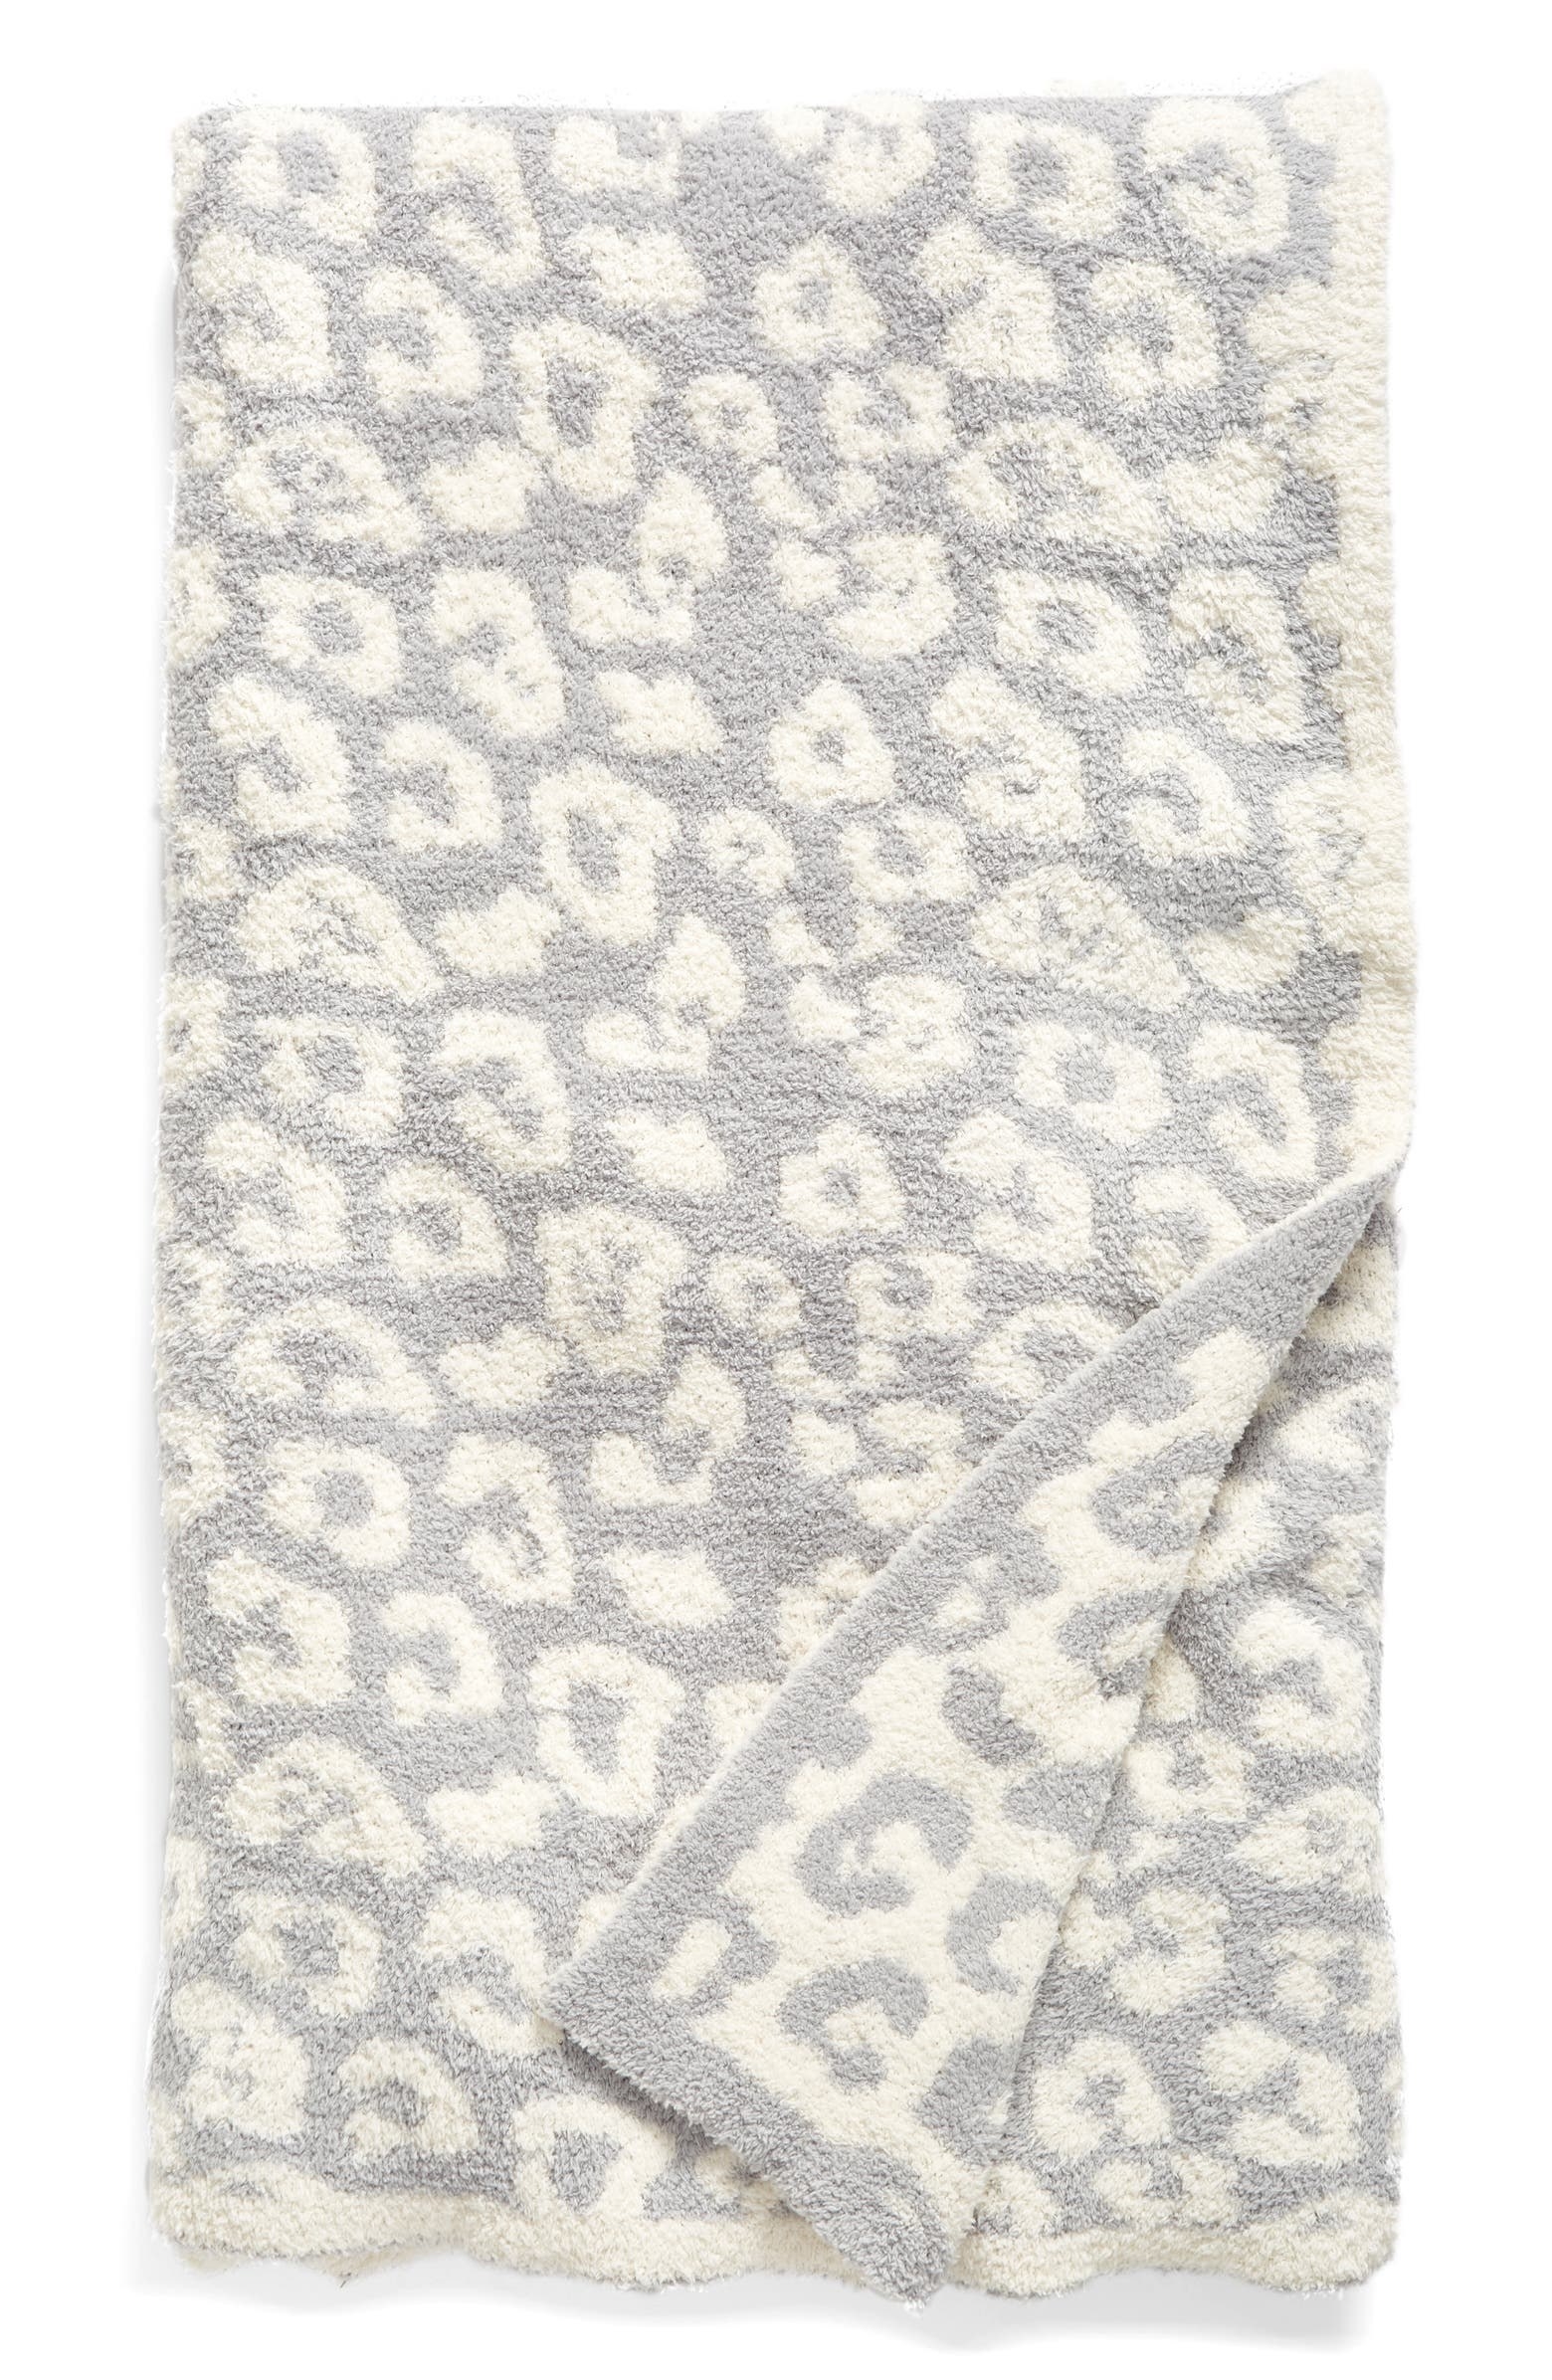 The gray leopard print throw blanket